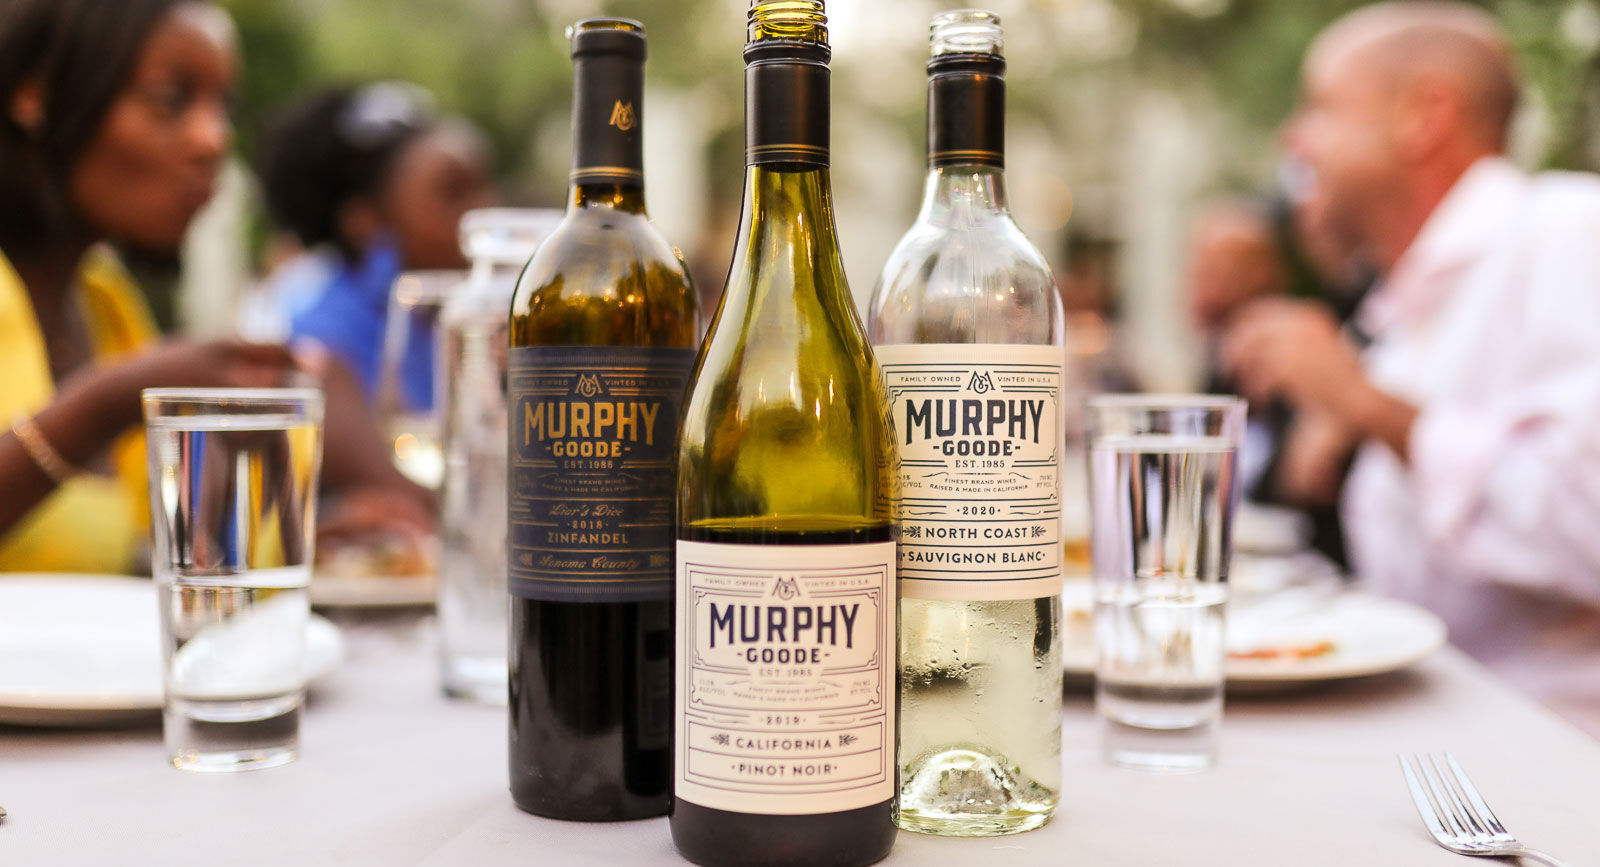 Three wine bottles of Murphy-Goode sitting on table.